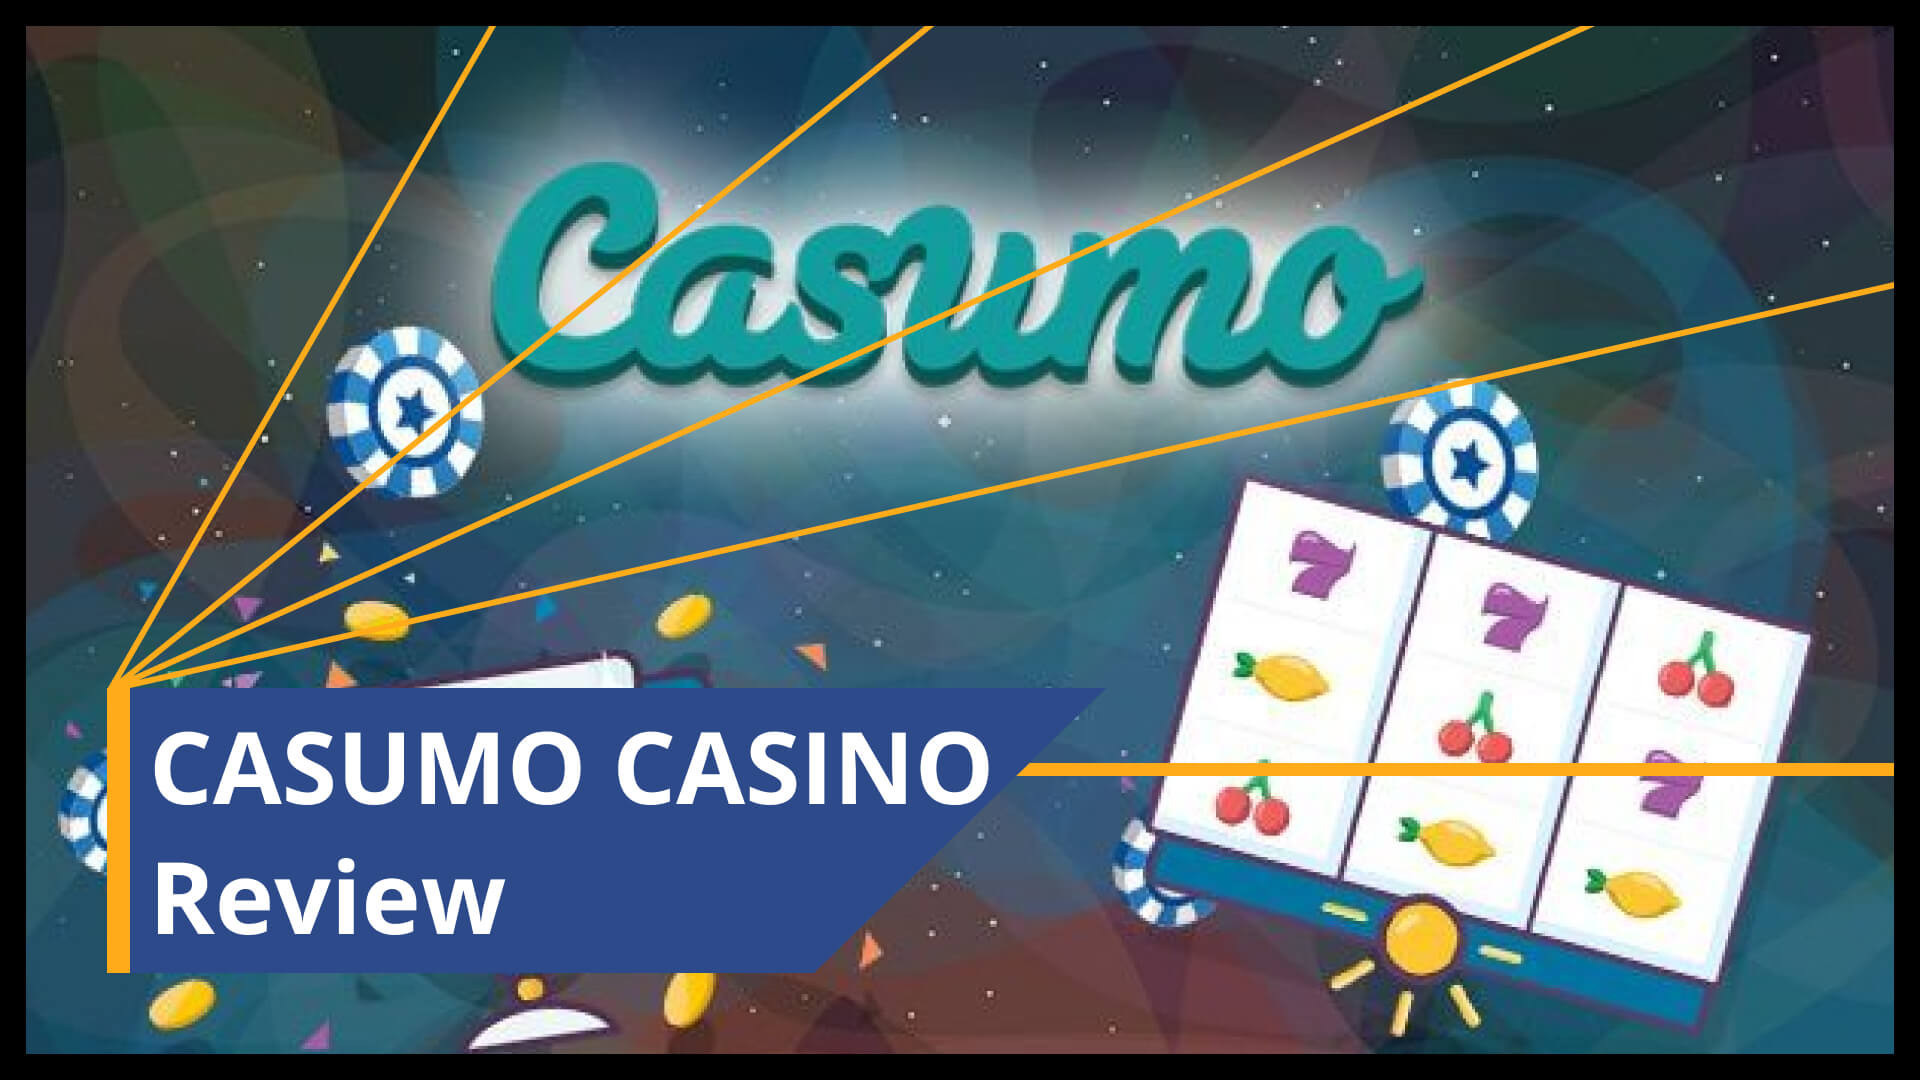 More information about Casumo mobile casino!